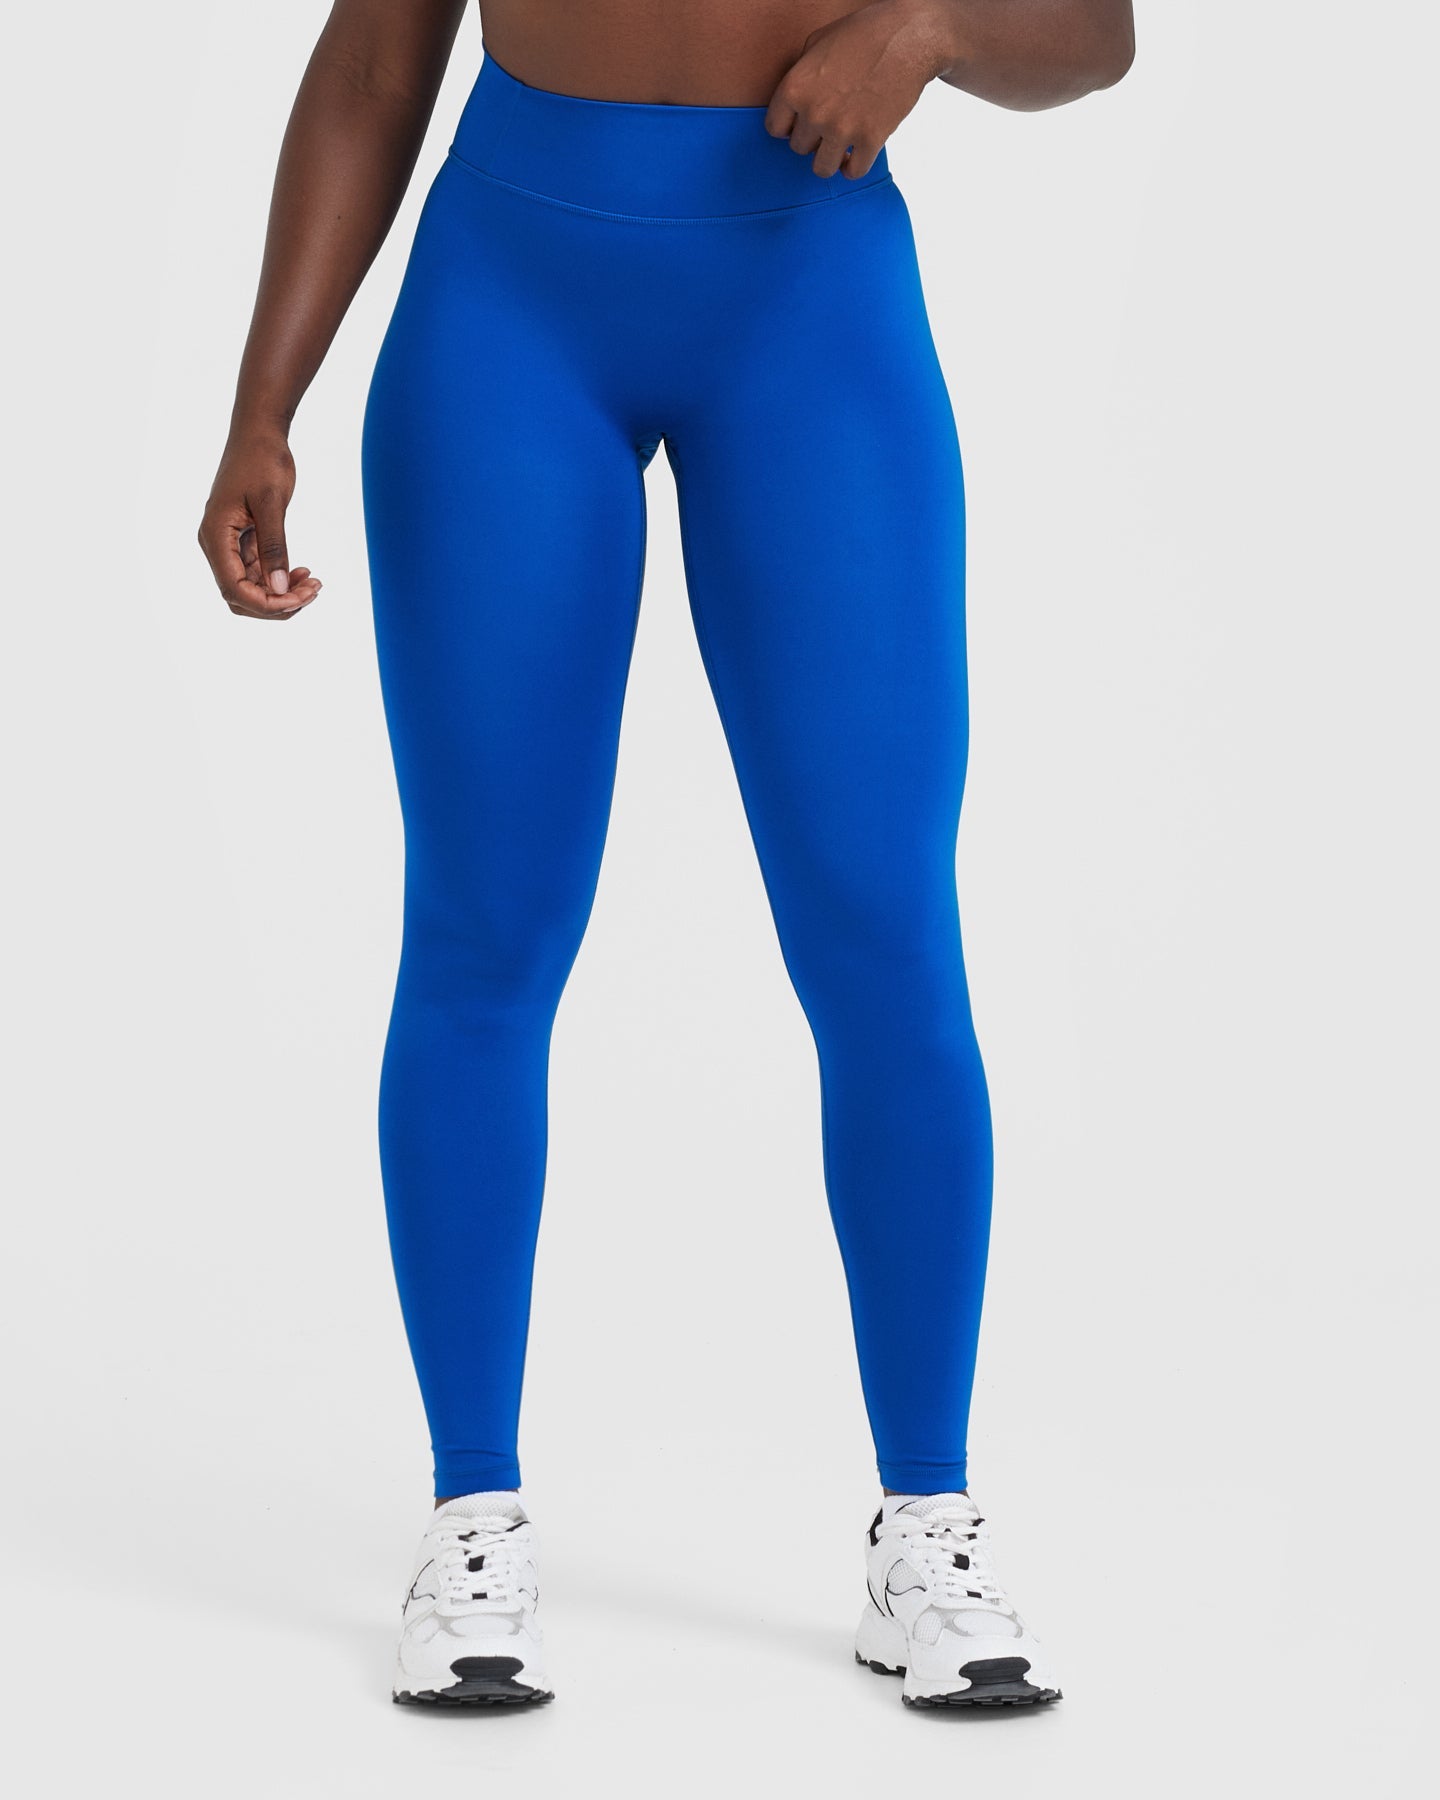 Blue High Waist Leggings Women's - Cobalt | Oner Active